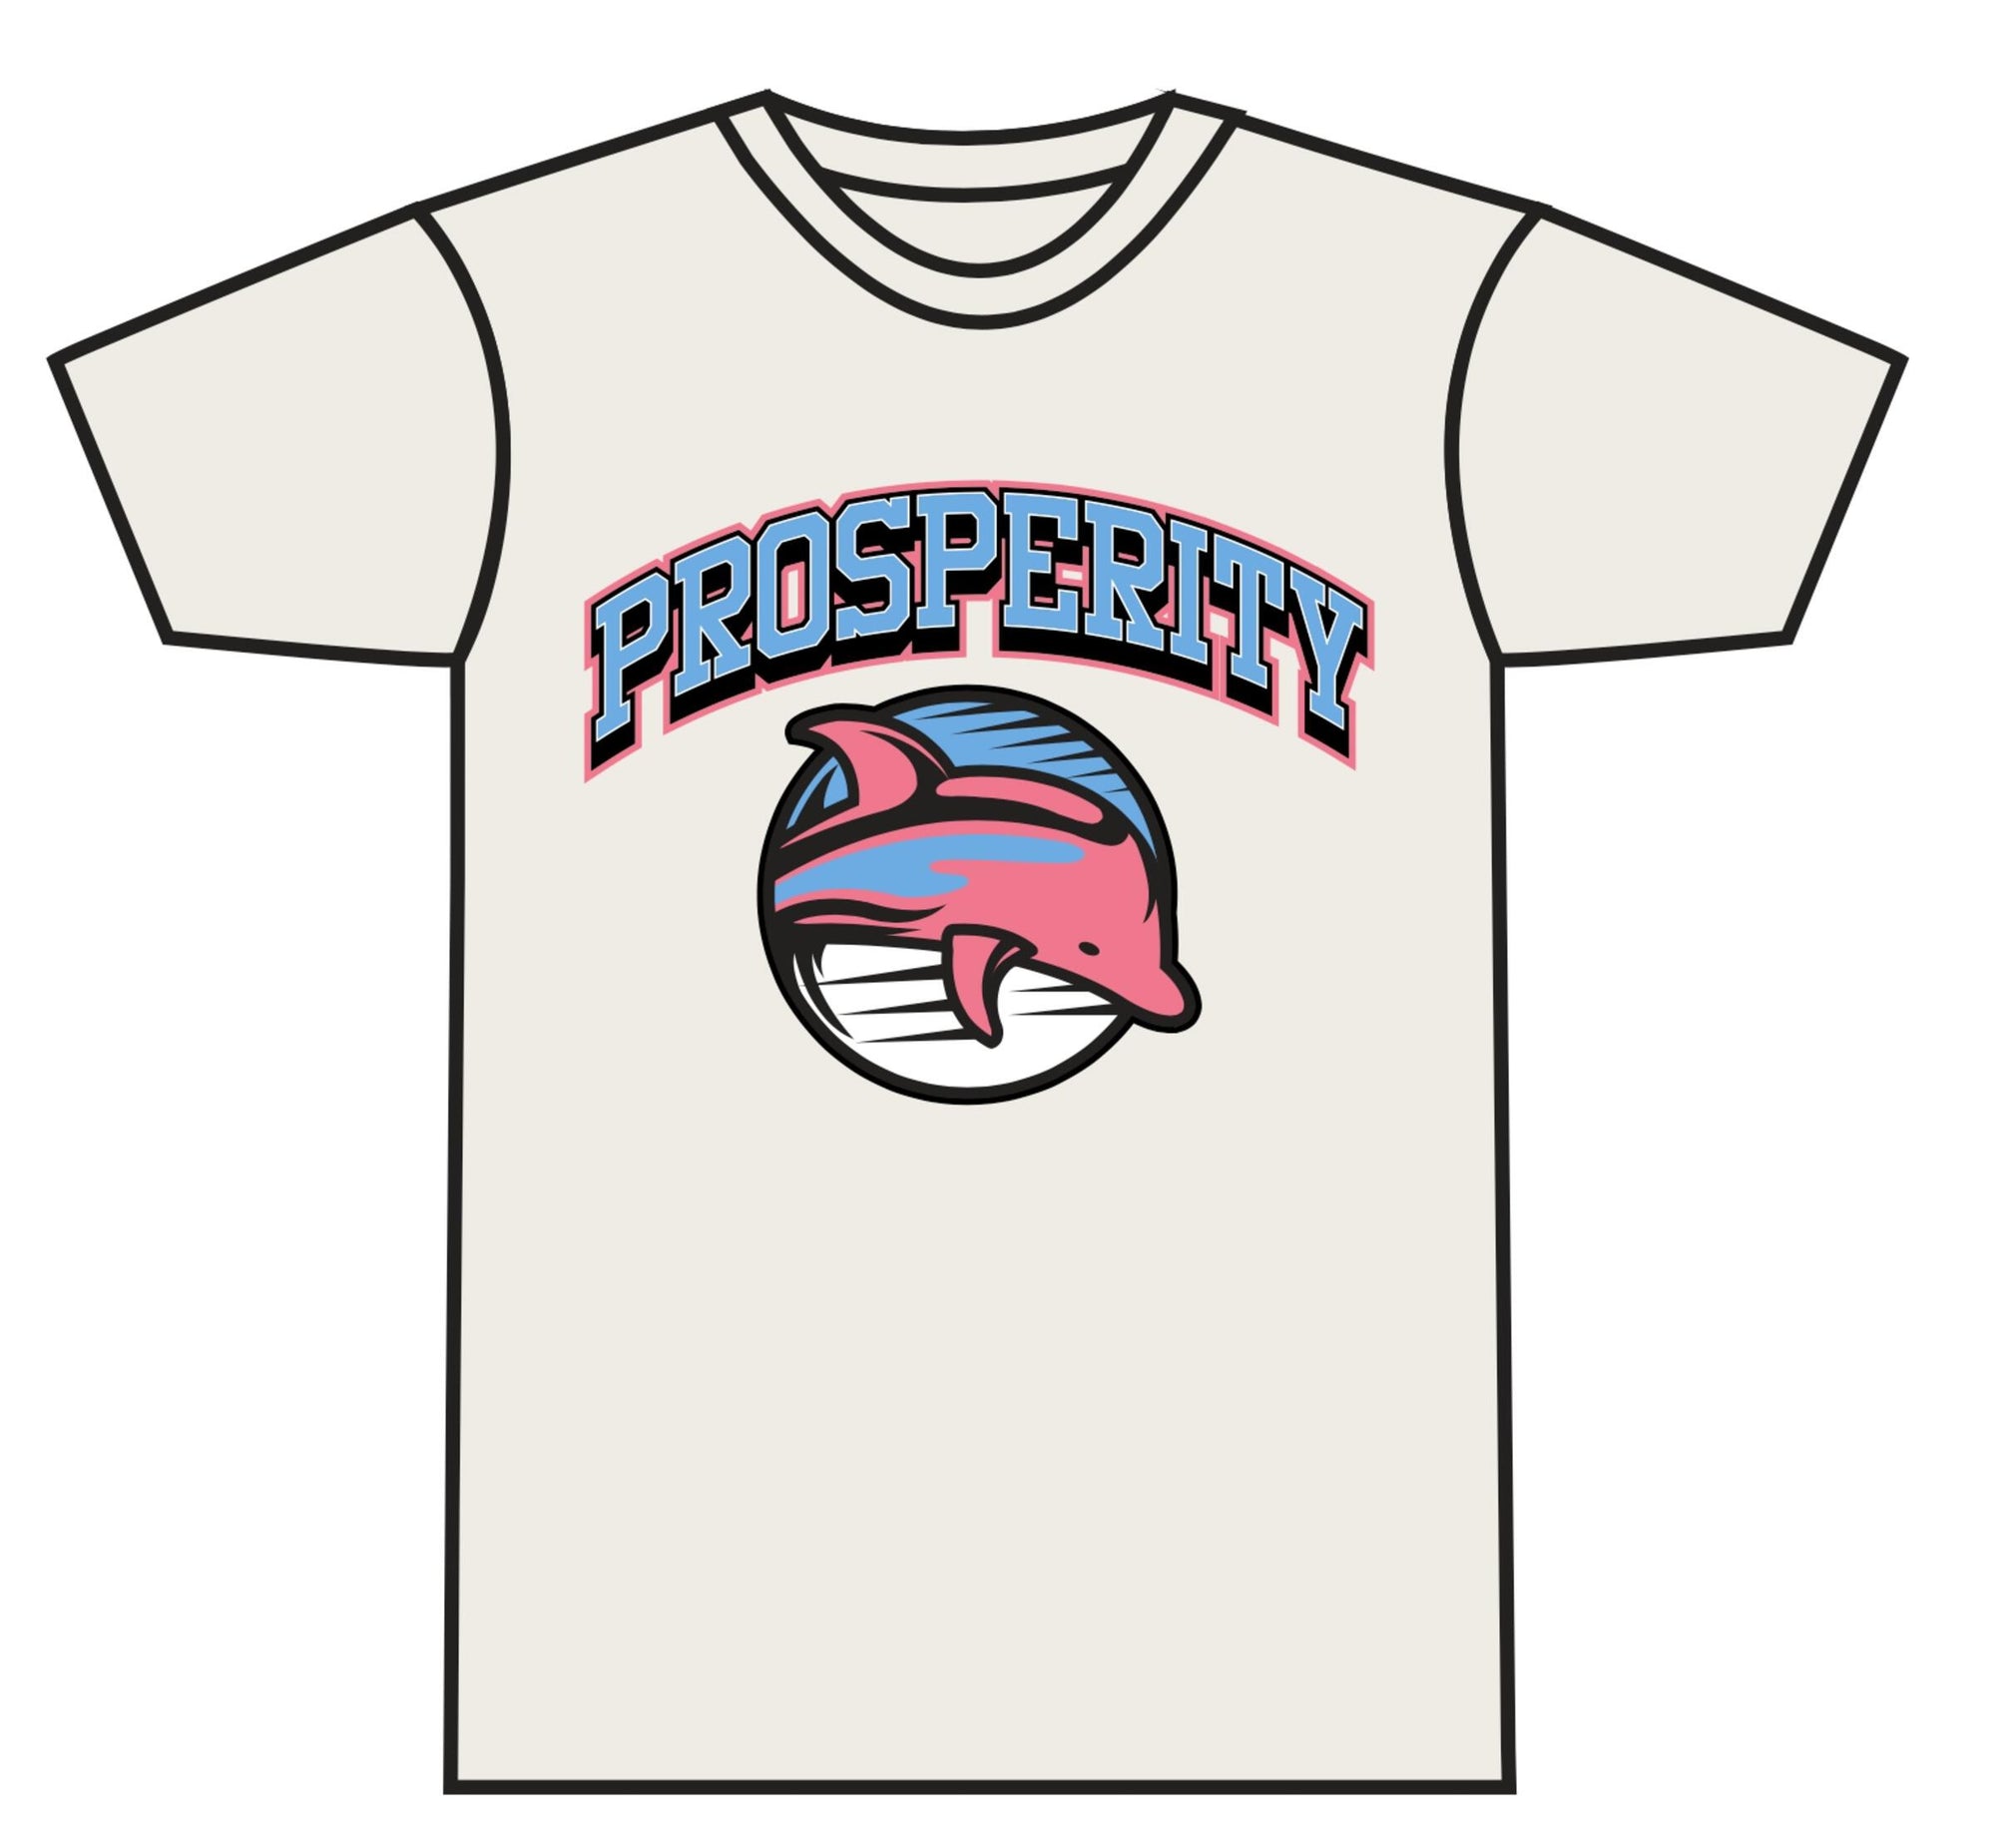 Prosperity Tee by Pink Dolphin - FLY GUYZ